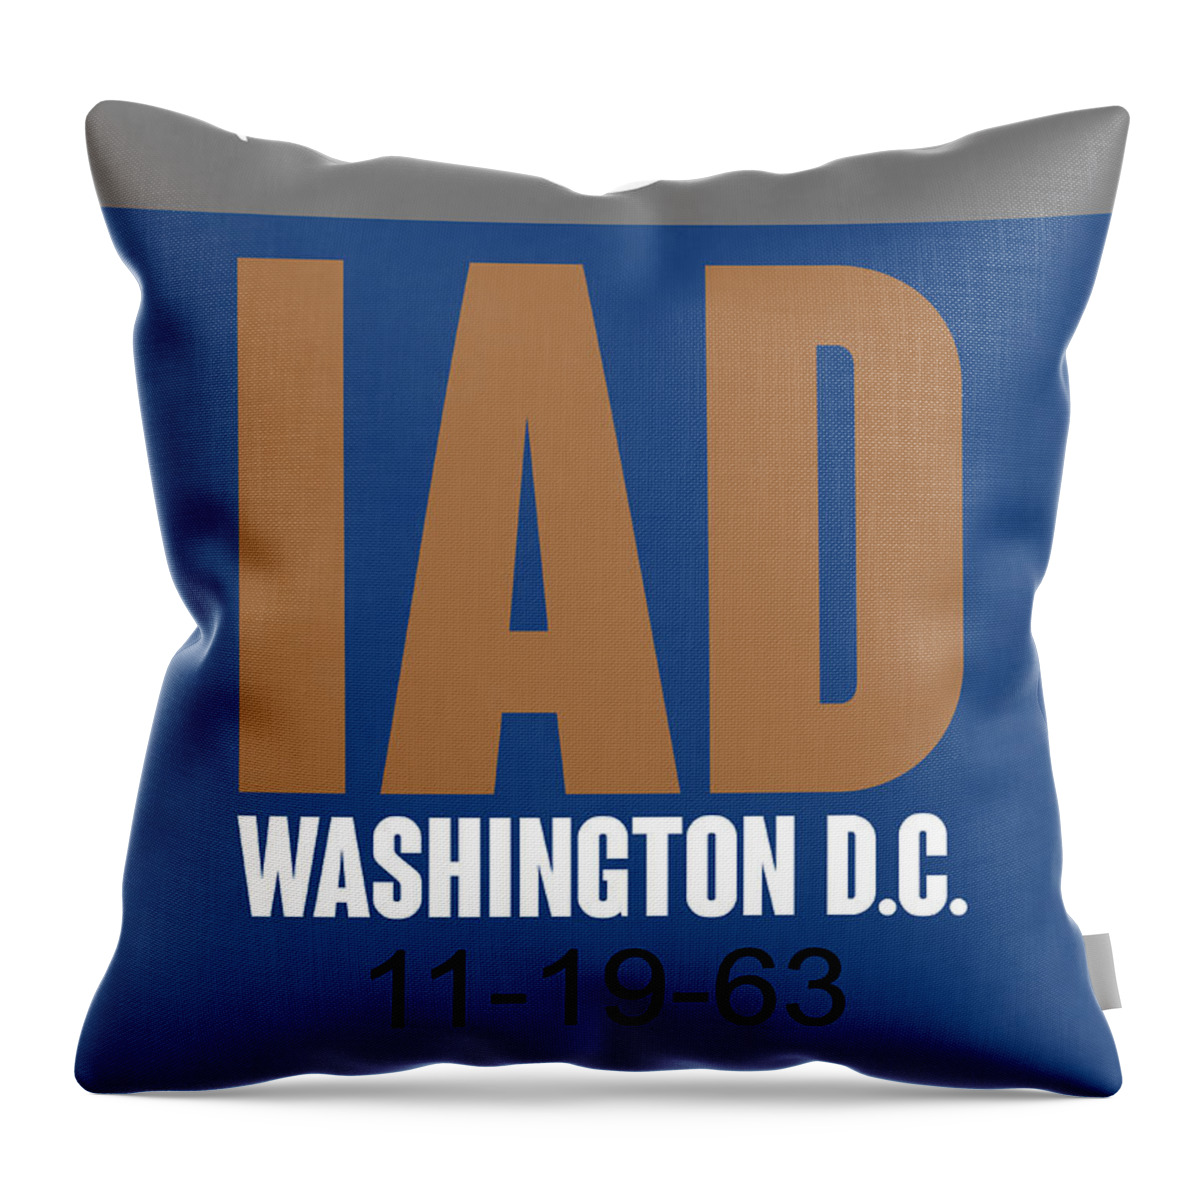 Washington D.c. Throw Pillow featuring the digital art Washington D.C. Airport Poster 4 by Naxart Studio